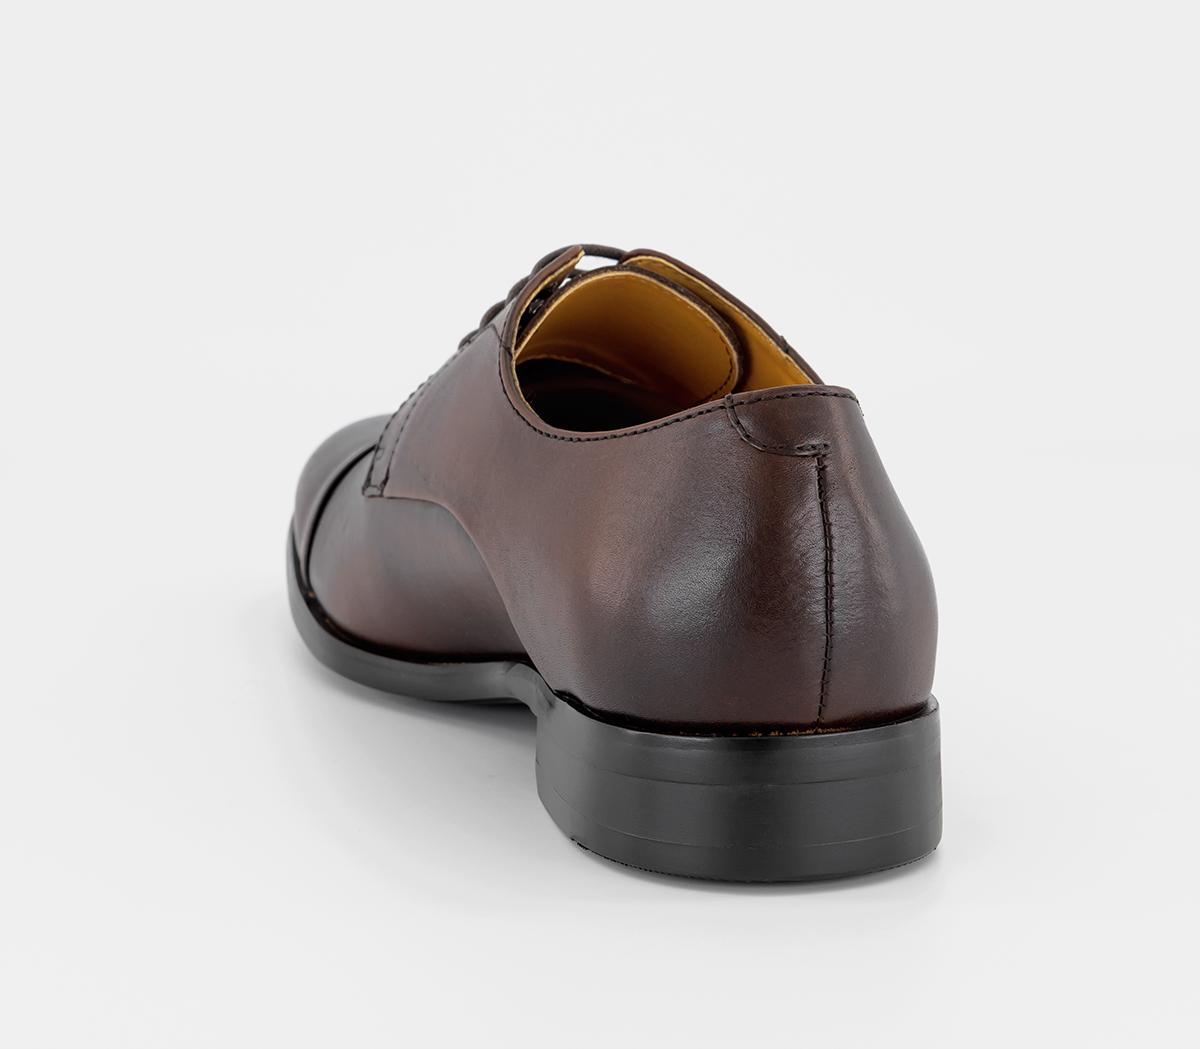 OFFICE Marlow Toe Cap Derby Brown Leather - Men’s Smart Shoes